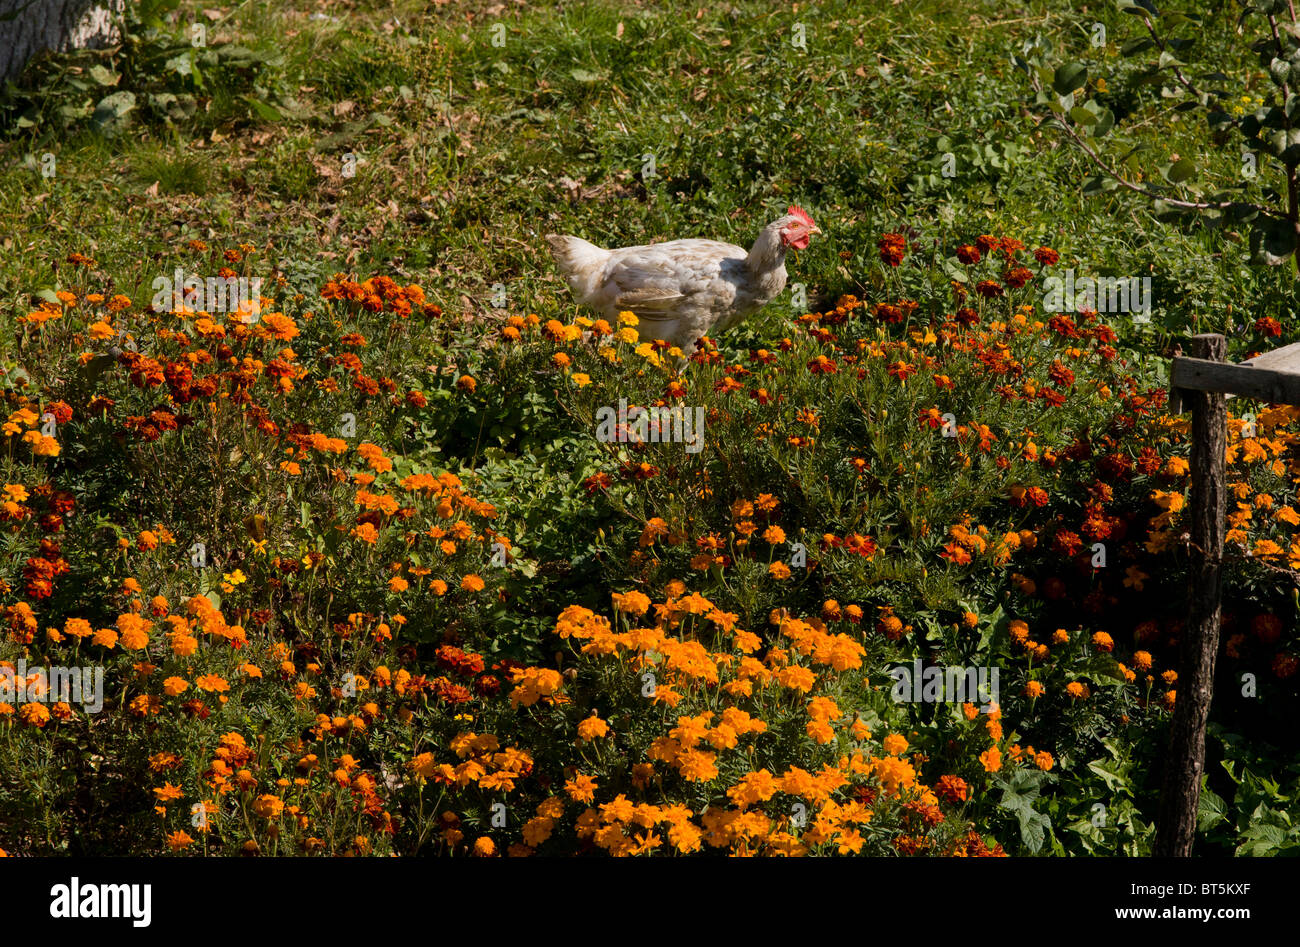 Chicken among french marigolds in the saxon village of Malancrav, Transylvania, Romania Stock Photo